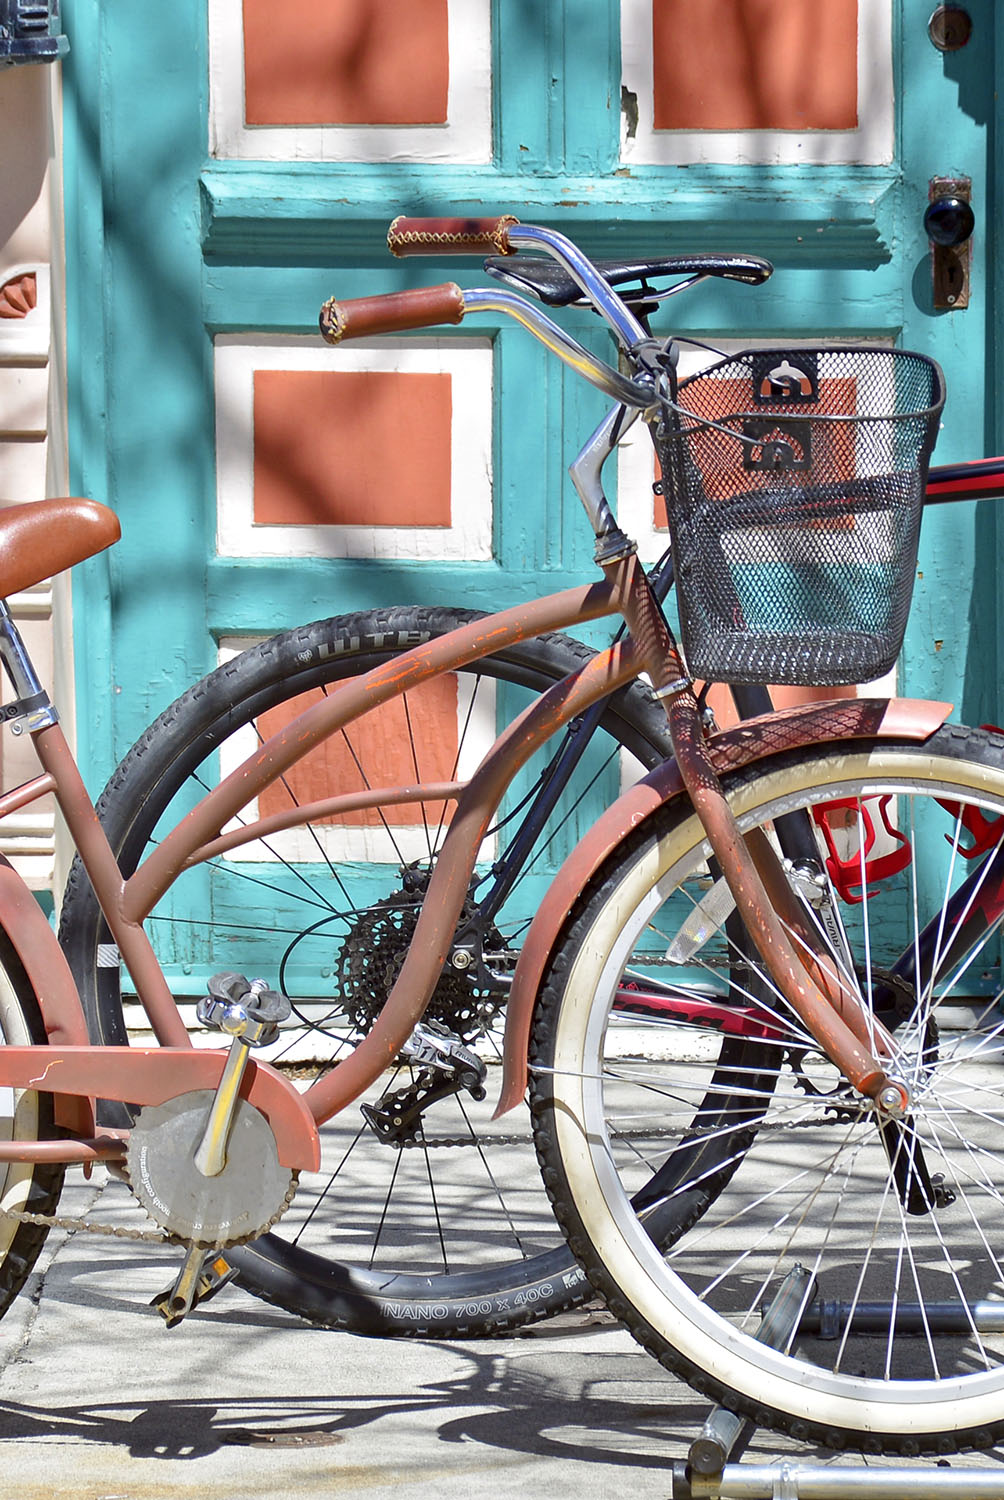 Bicycle_Basket_Antique_Vintage_Door_Turquoise.jpg